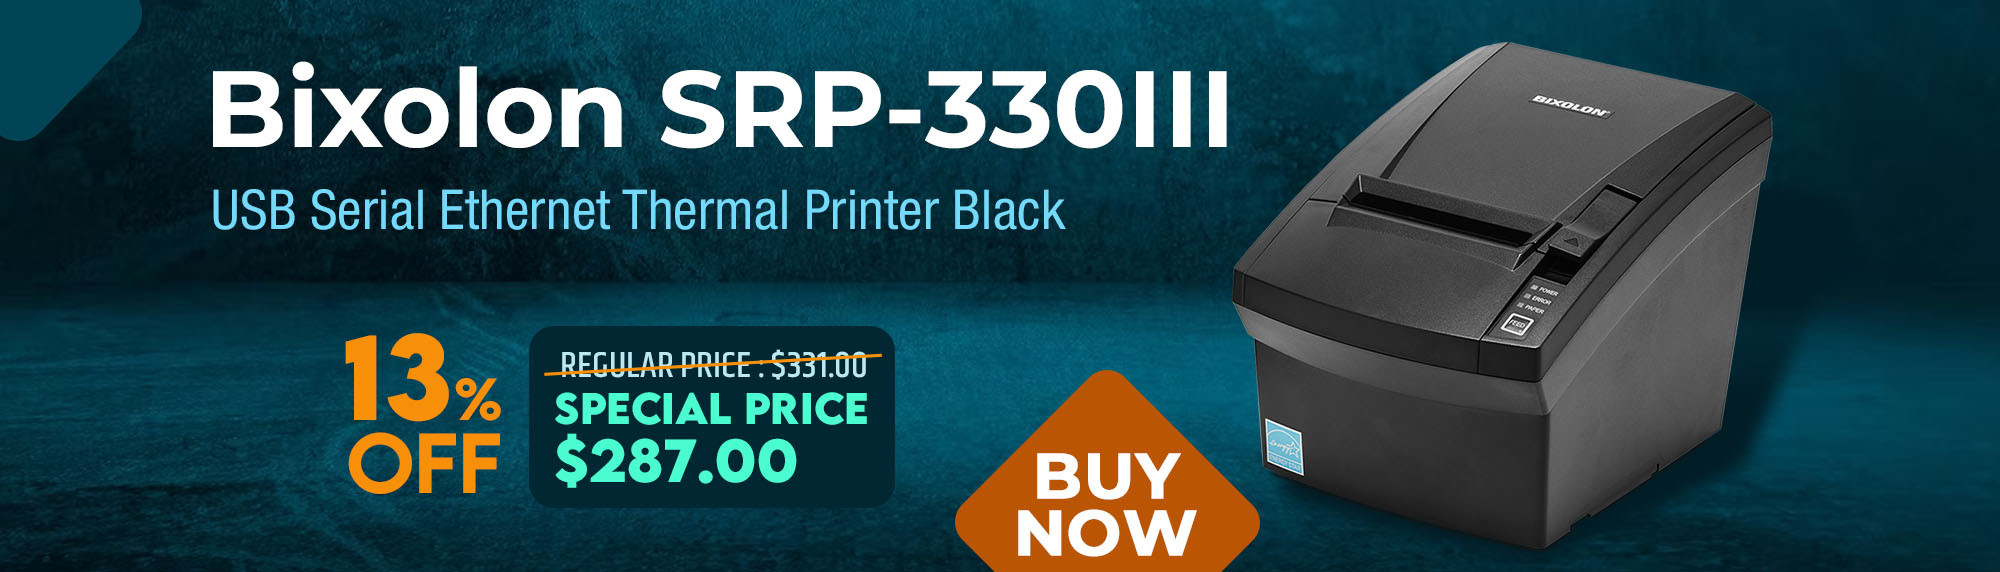 https://onlypos.com.au/bixolon-srp-330iii-usb-serial-ethernet-thermal-printer-black/